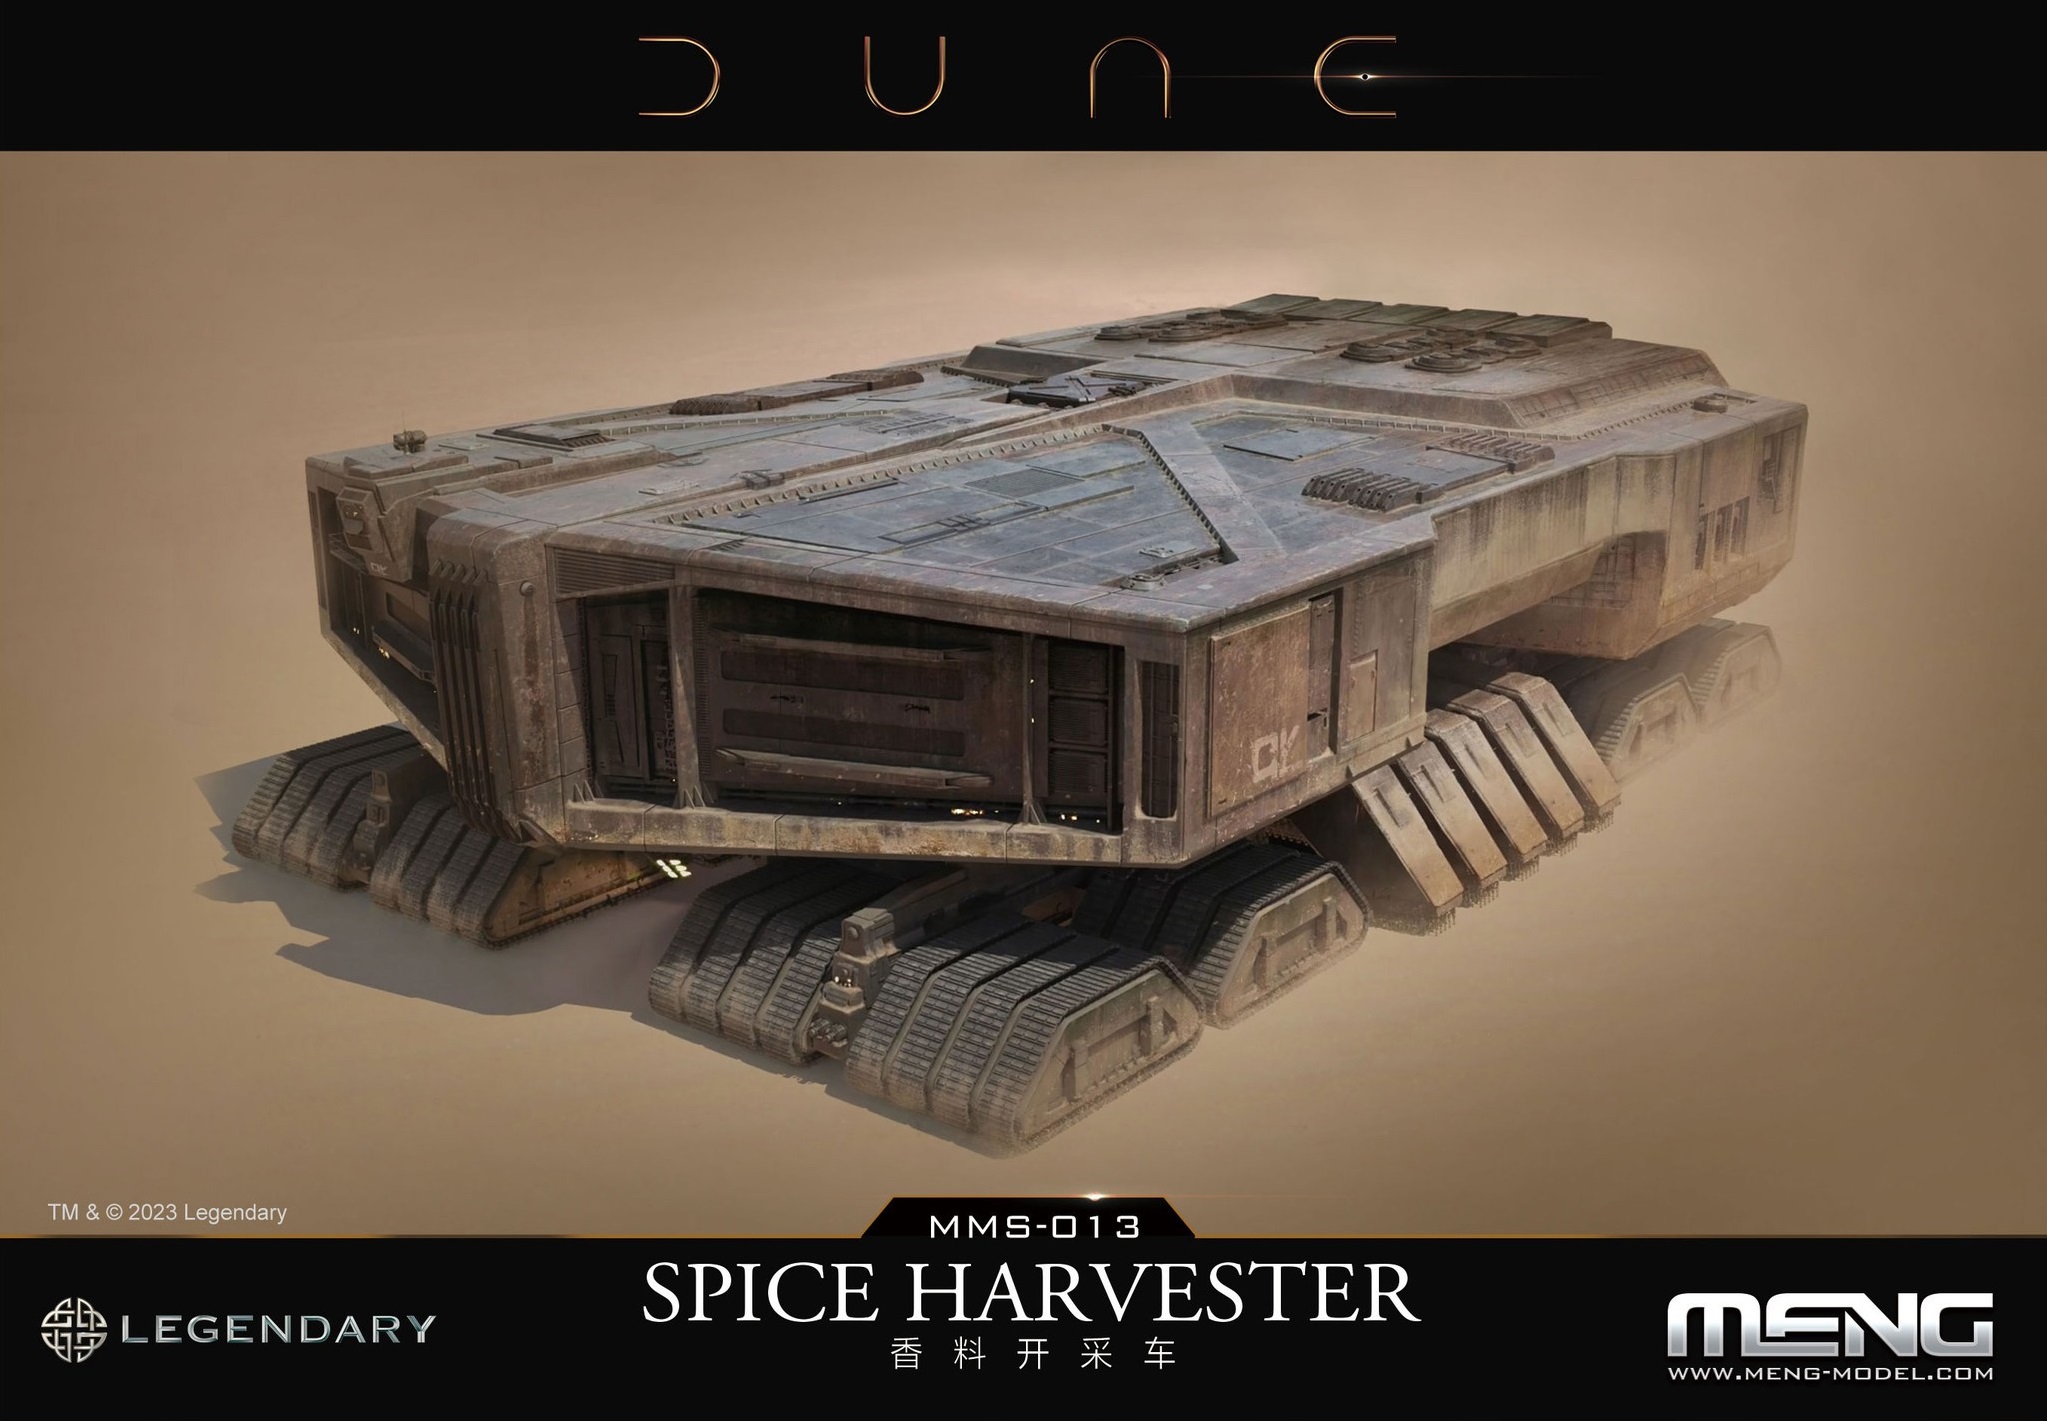 MMS-013  техника и вооружение  Dune Spice Harvester (Размер: 100мм x 65мм x 27мм)